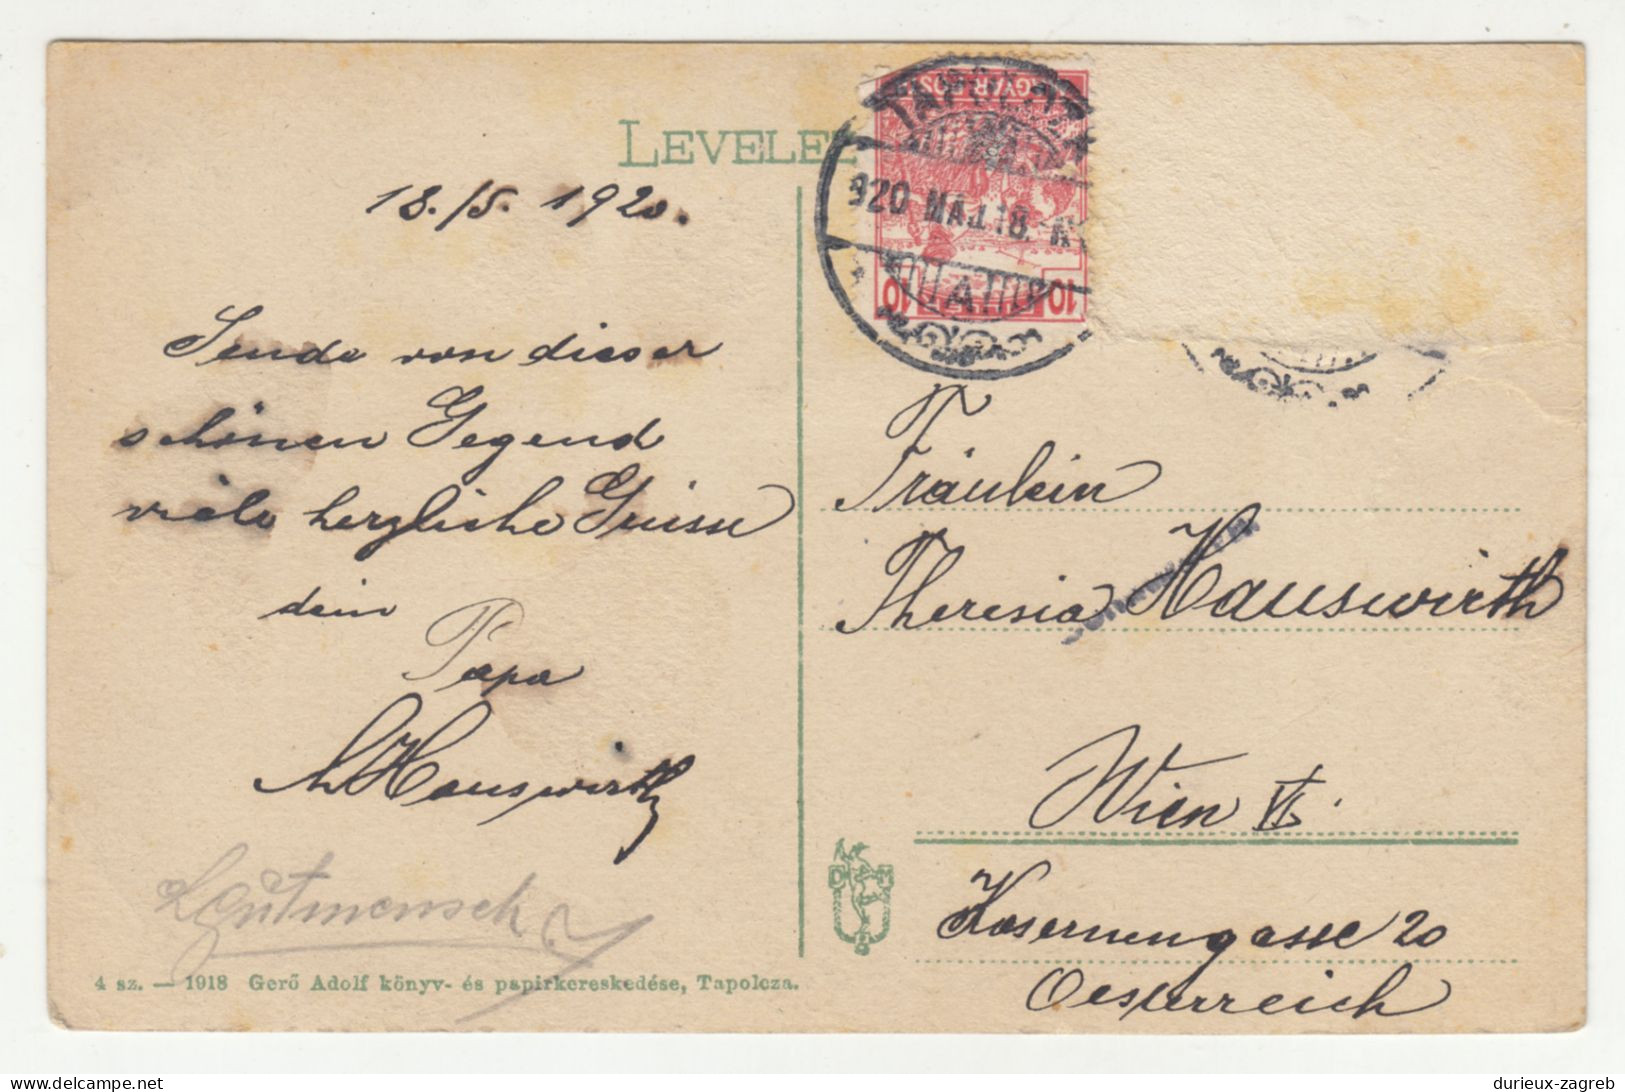 Tapolcza Old Postcard Posted 1920 B240503 - Hongarije